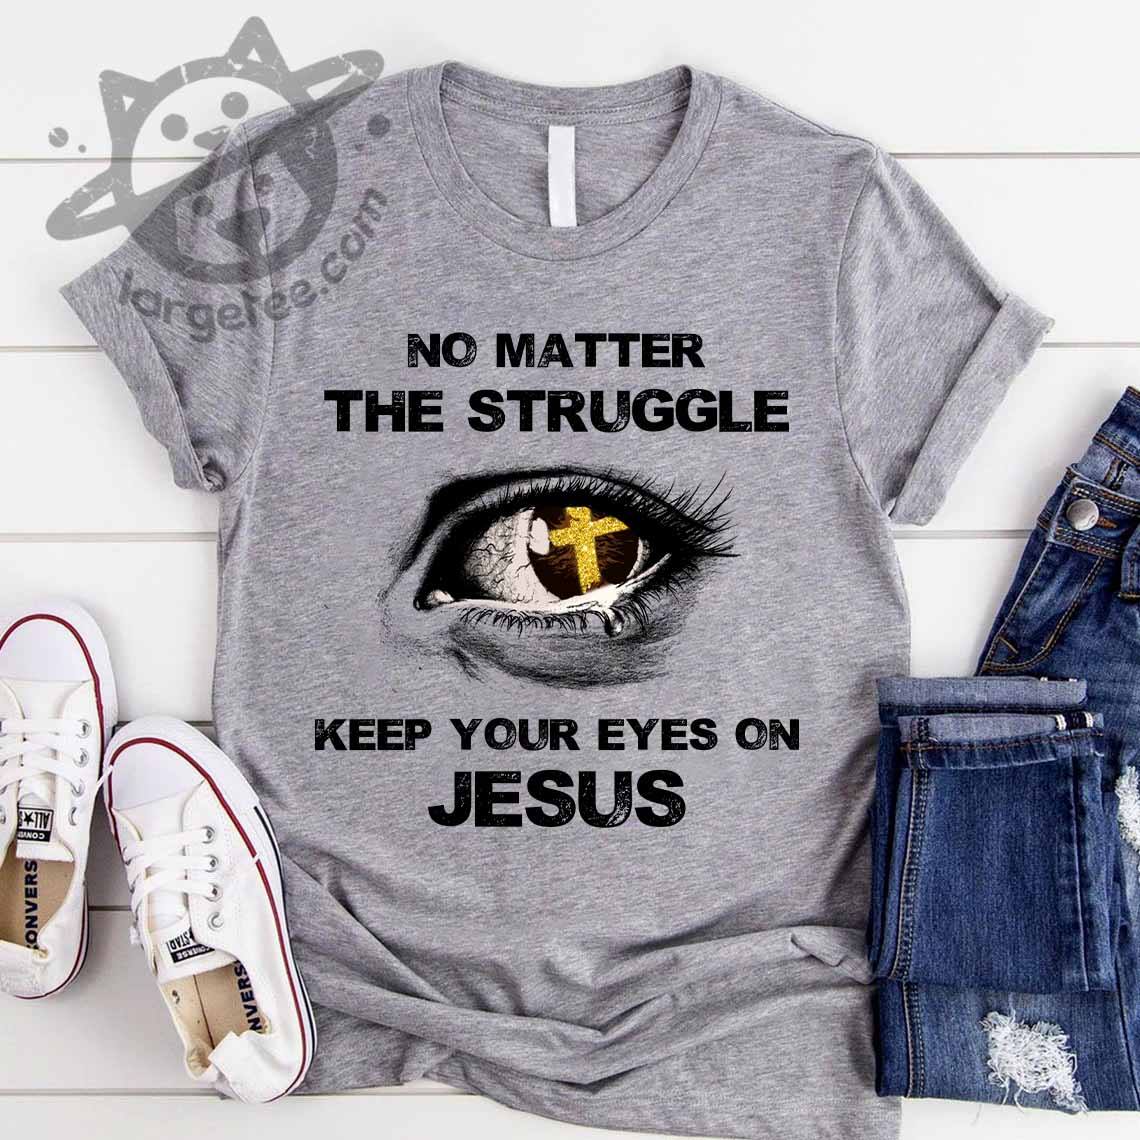 No matter the struggle keep your eyes on Jesus - Eye and Jesus